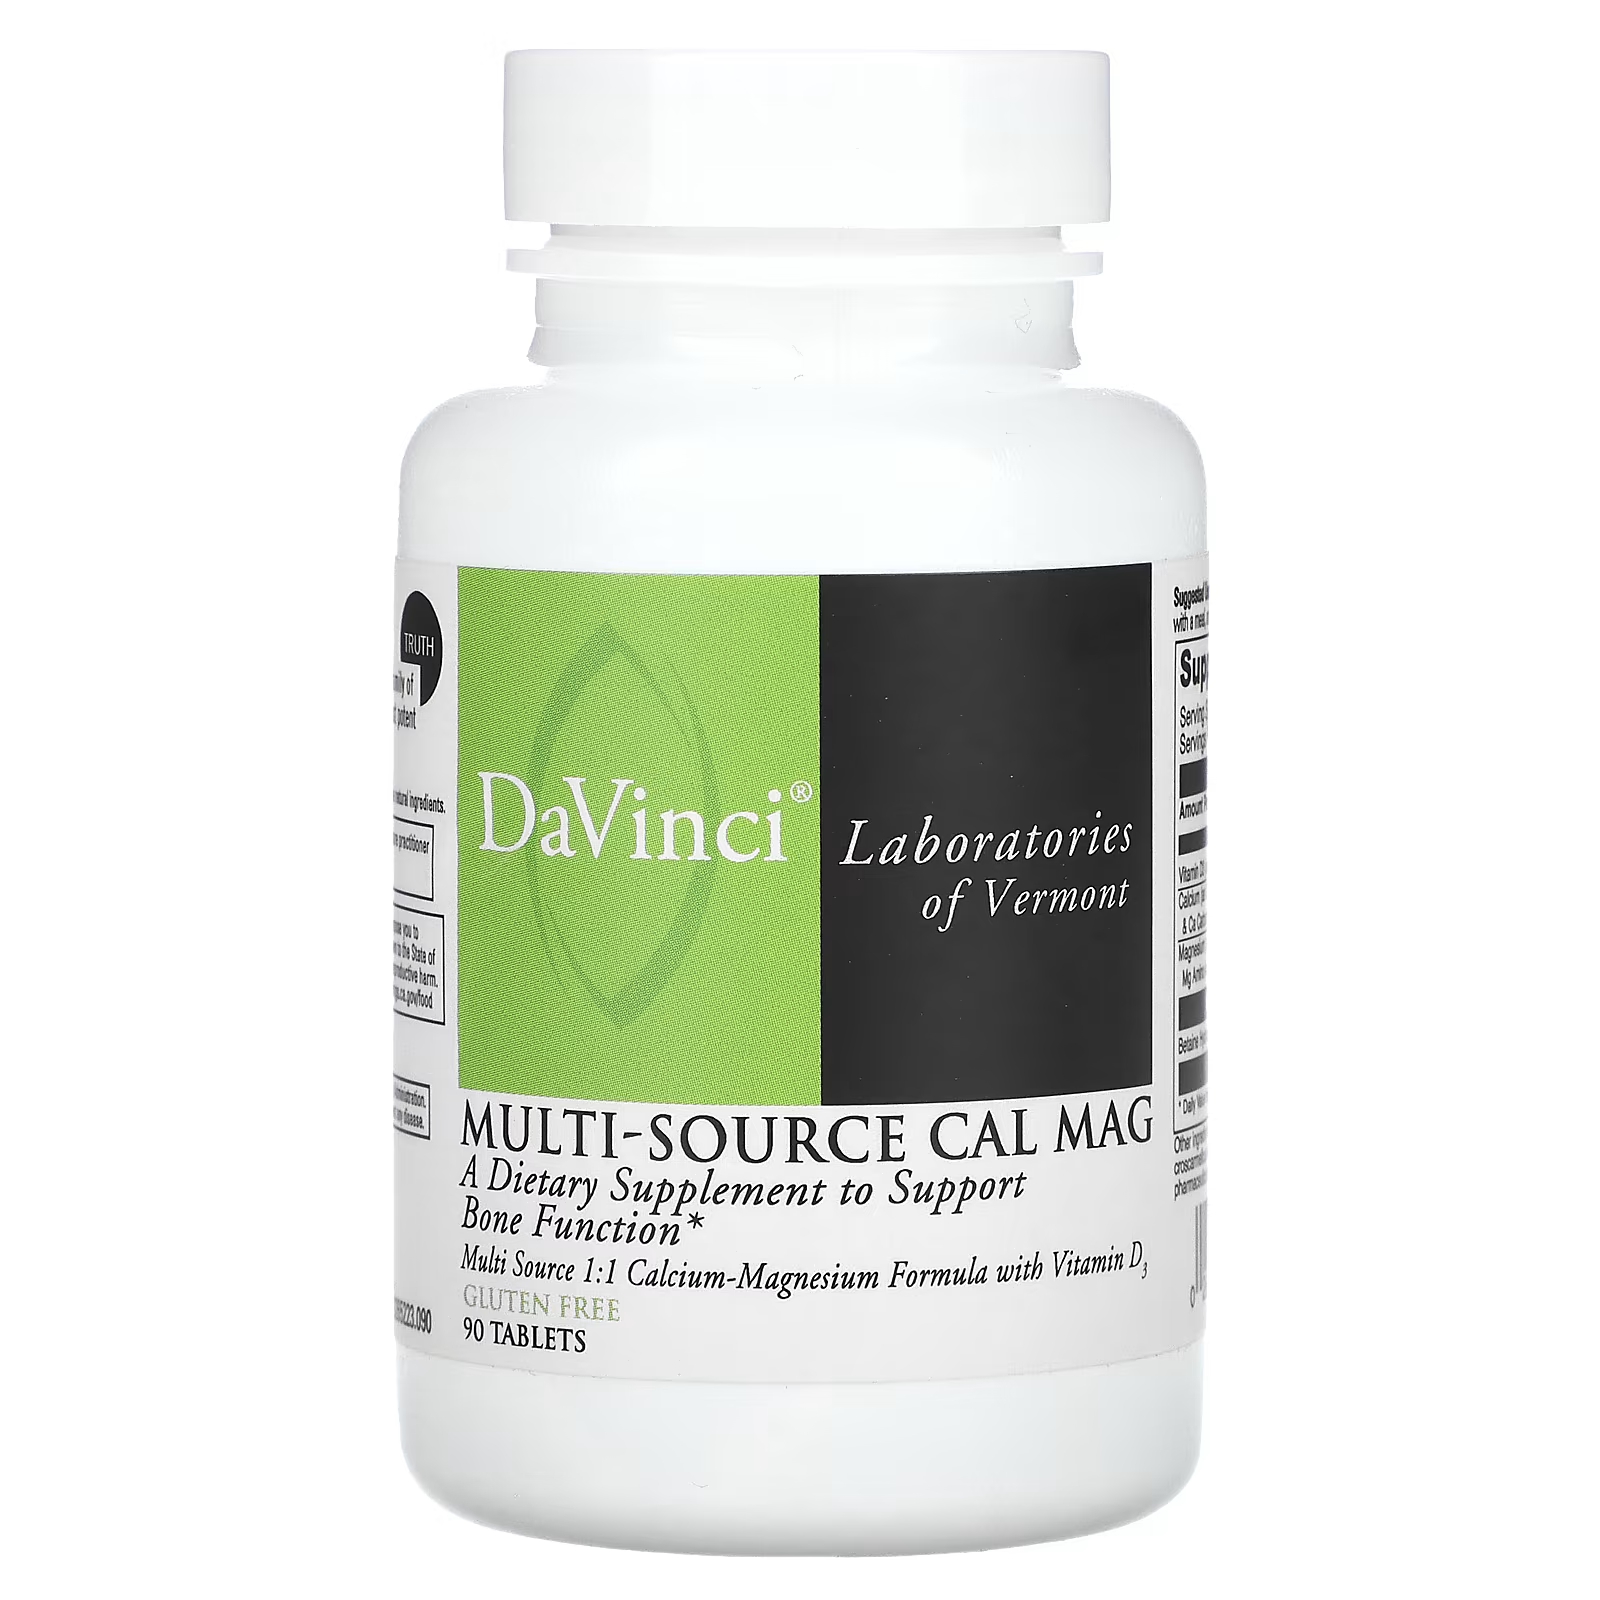 Пищевая добавка DaVinci Laboratories of Vermont Multi-Source Cal Mag, 90 таблеток пищевая добавка zand для иммунитета с цинком и витамином d3 60 таблеток